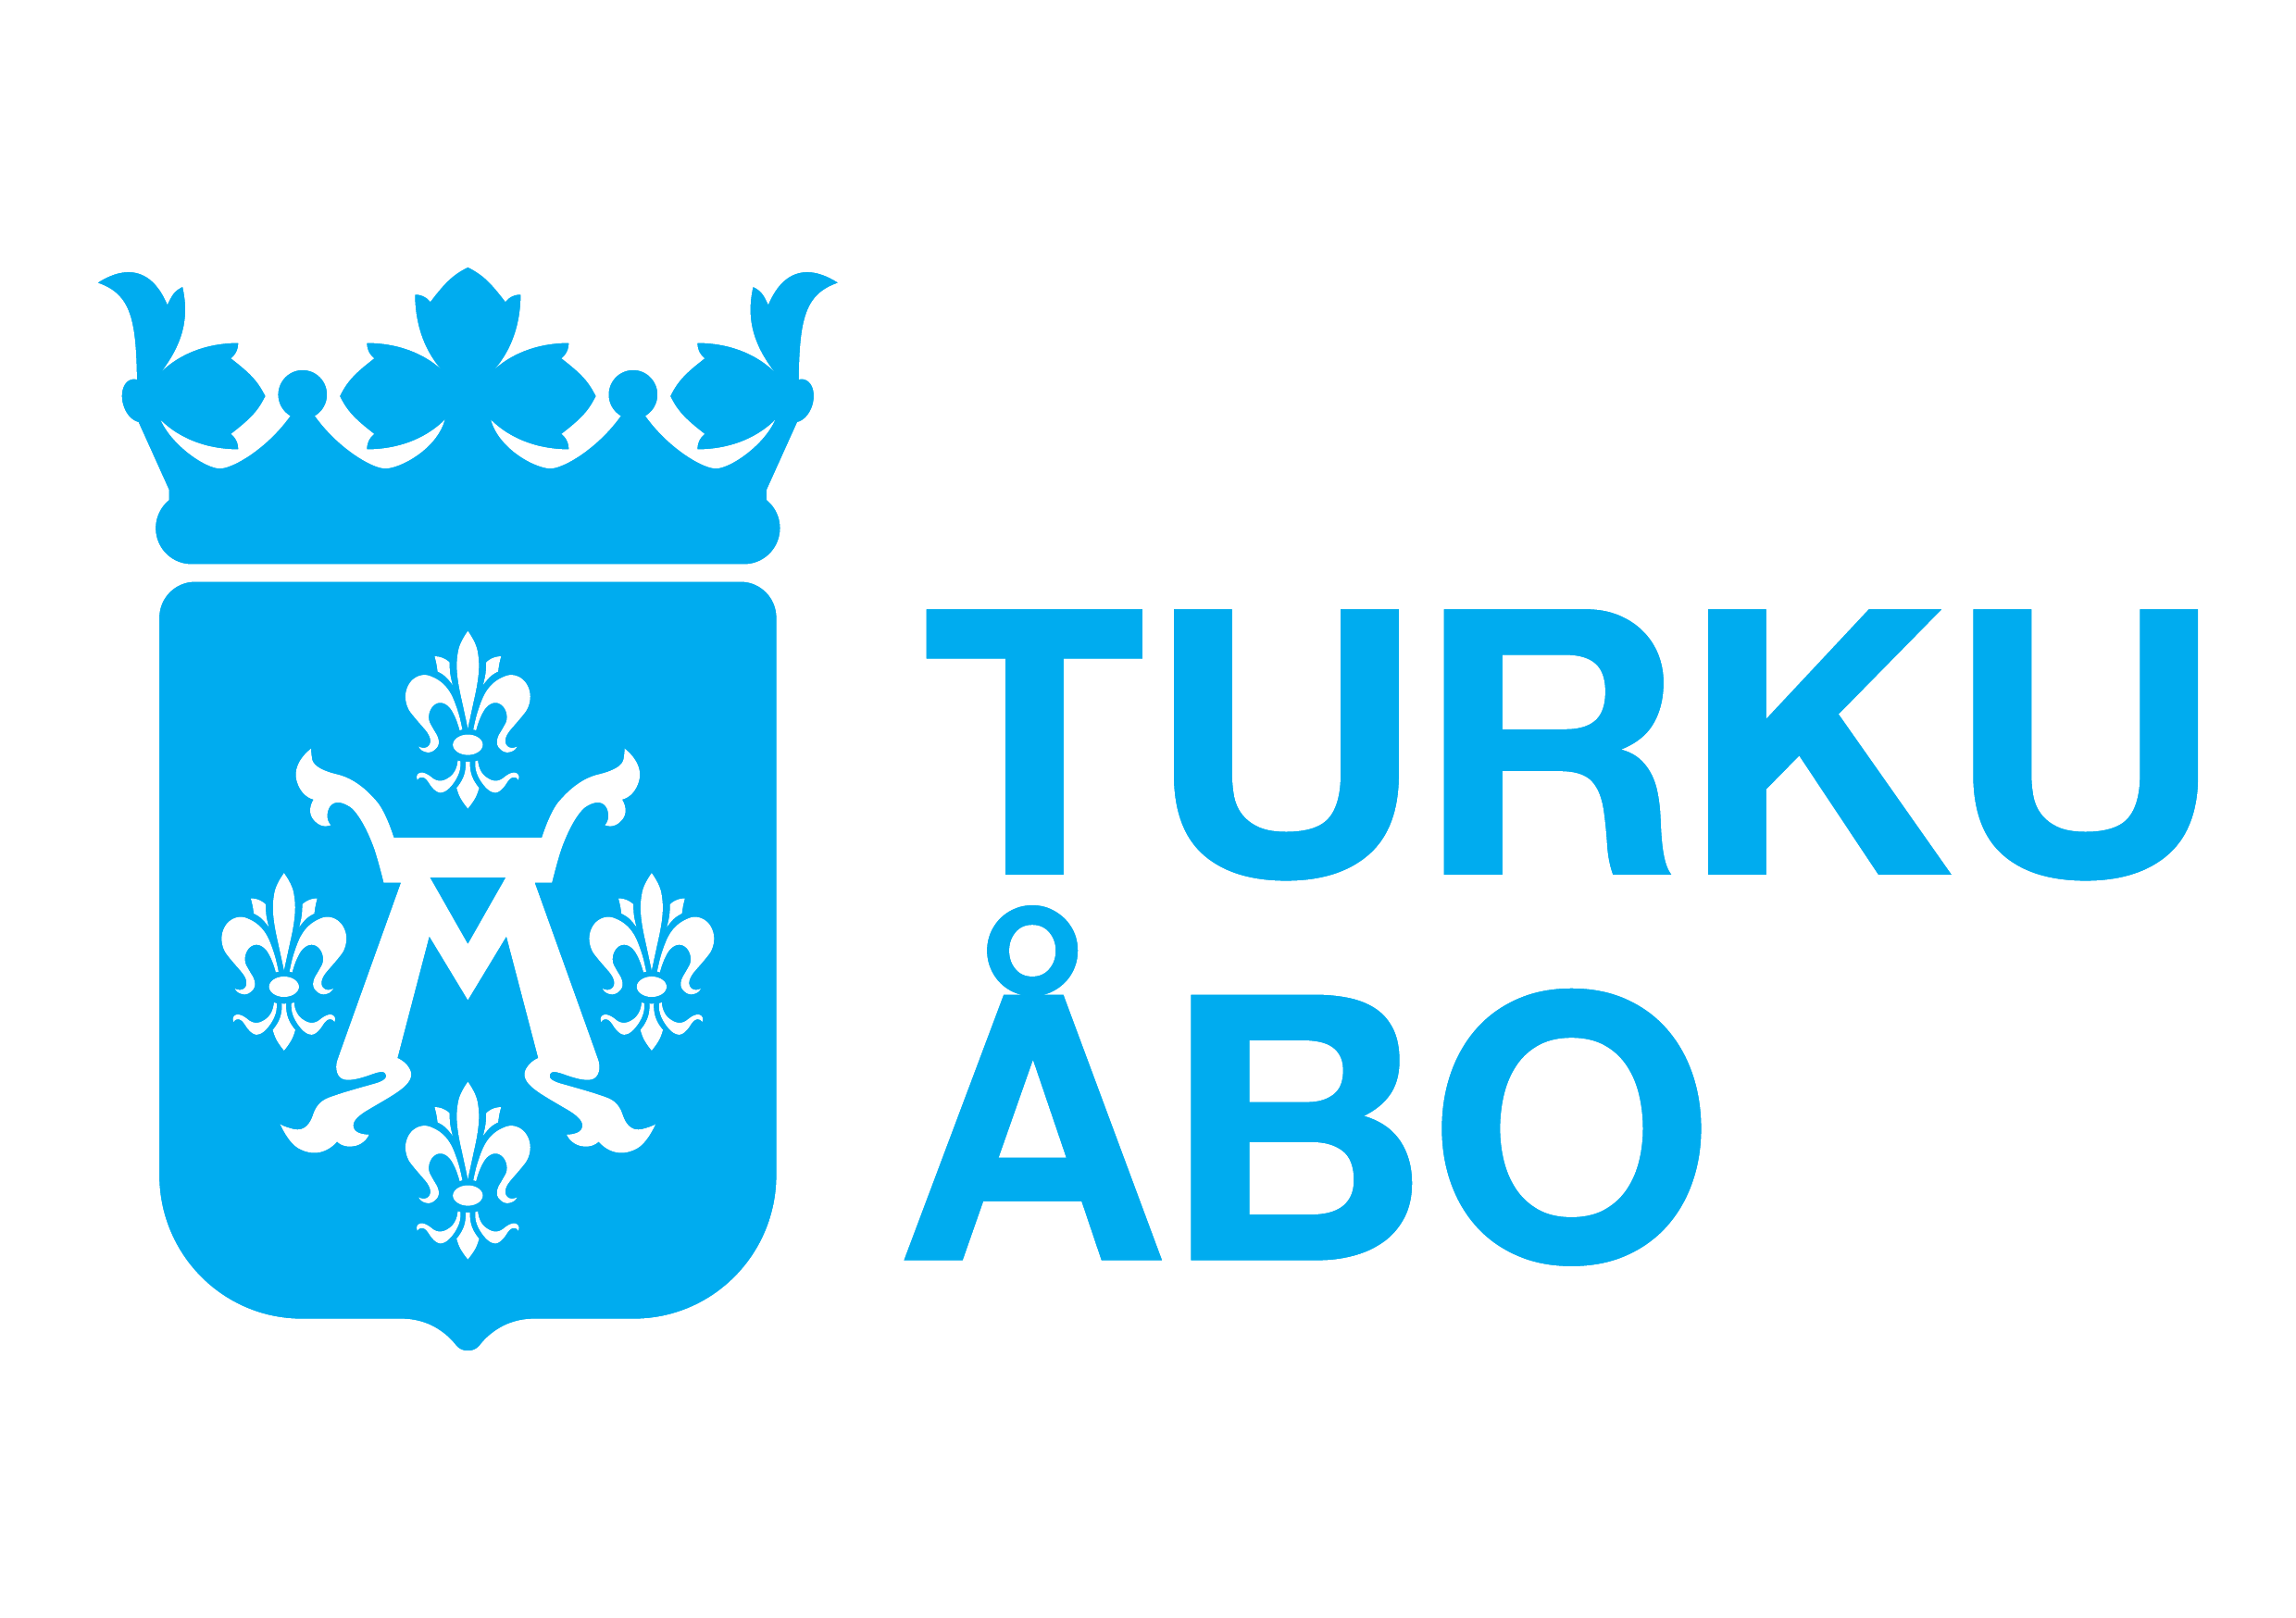 City of Turku logo